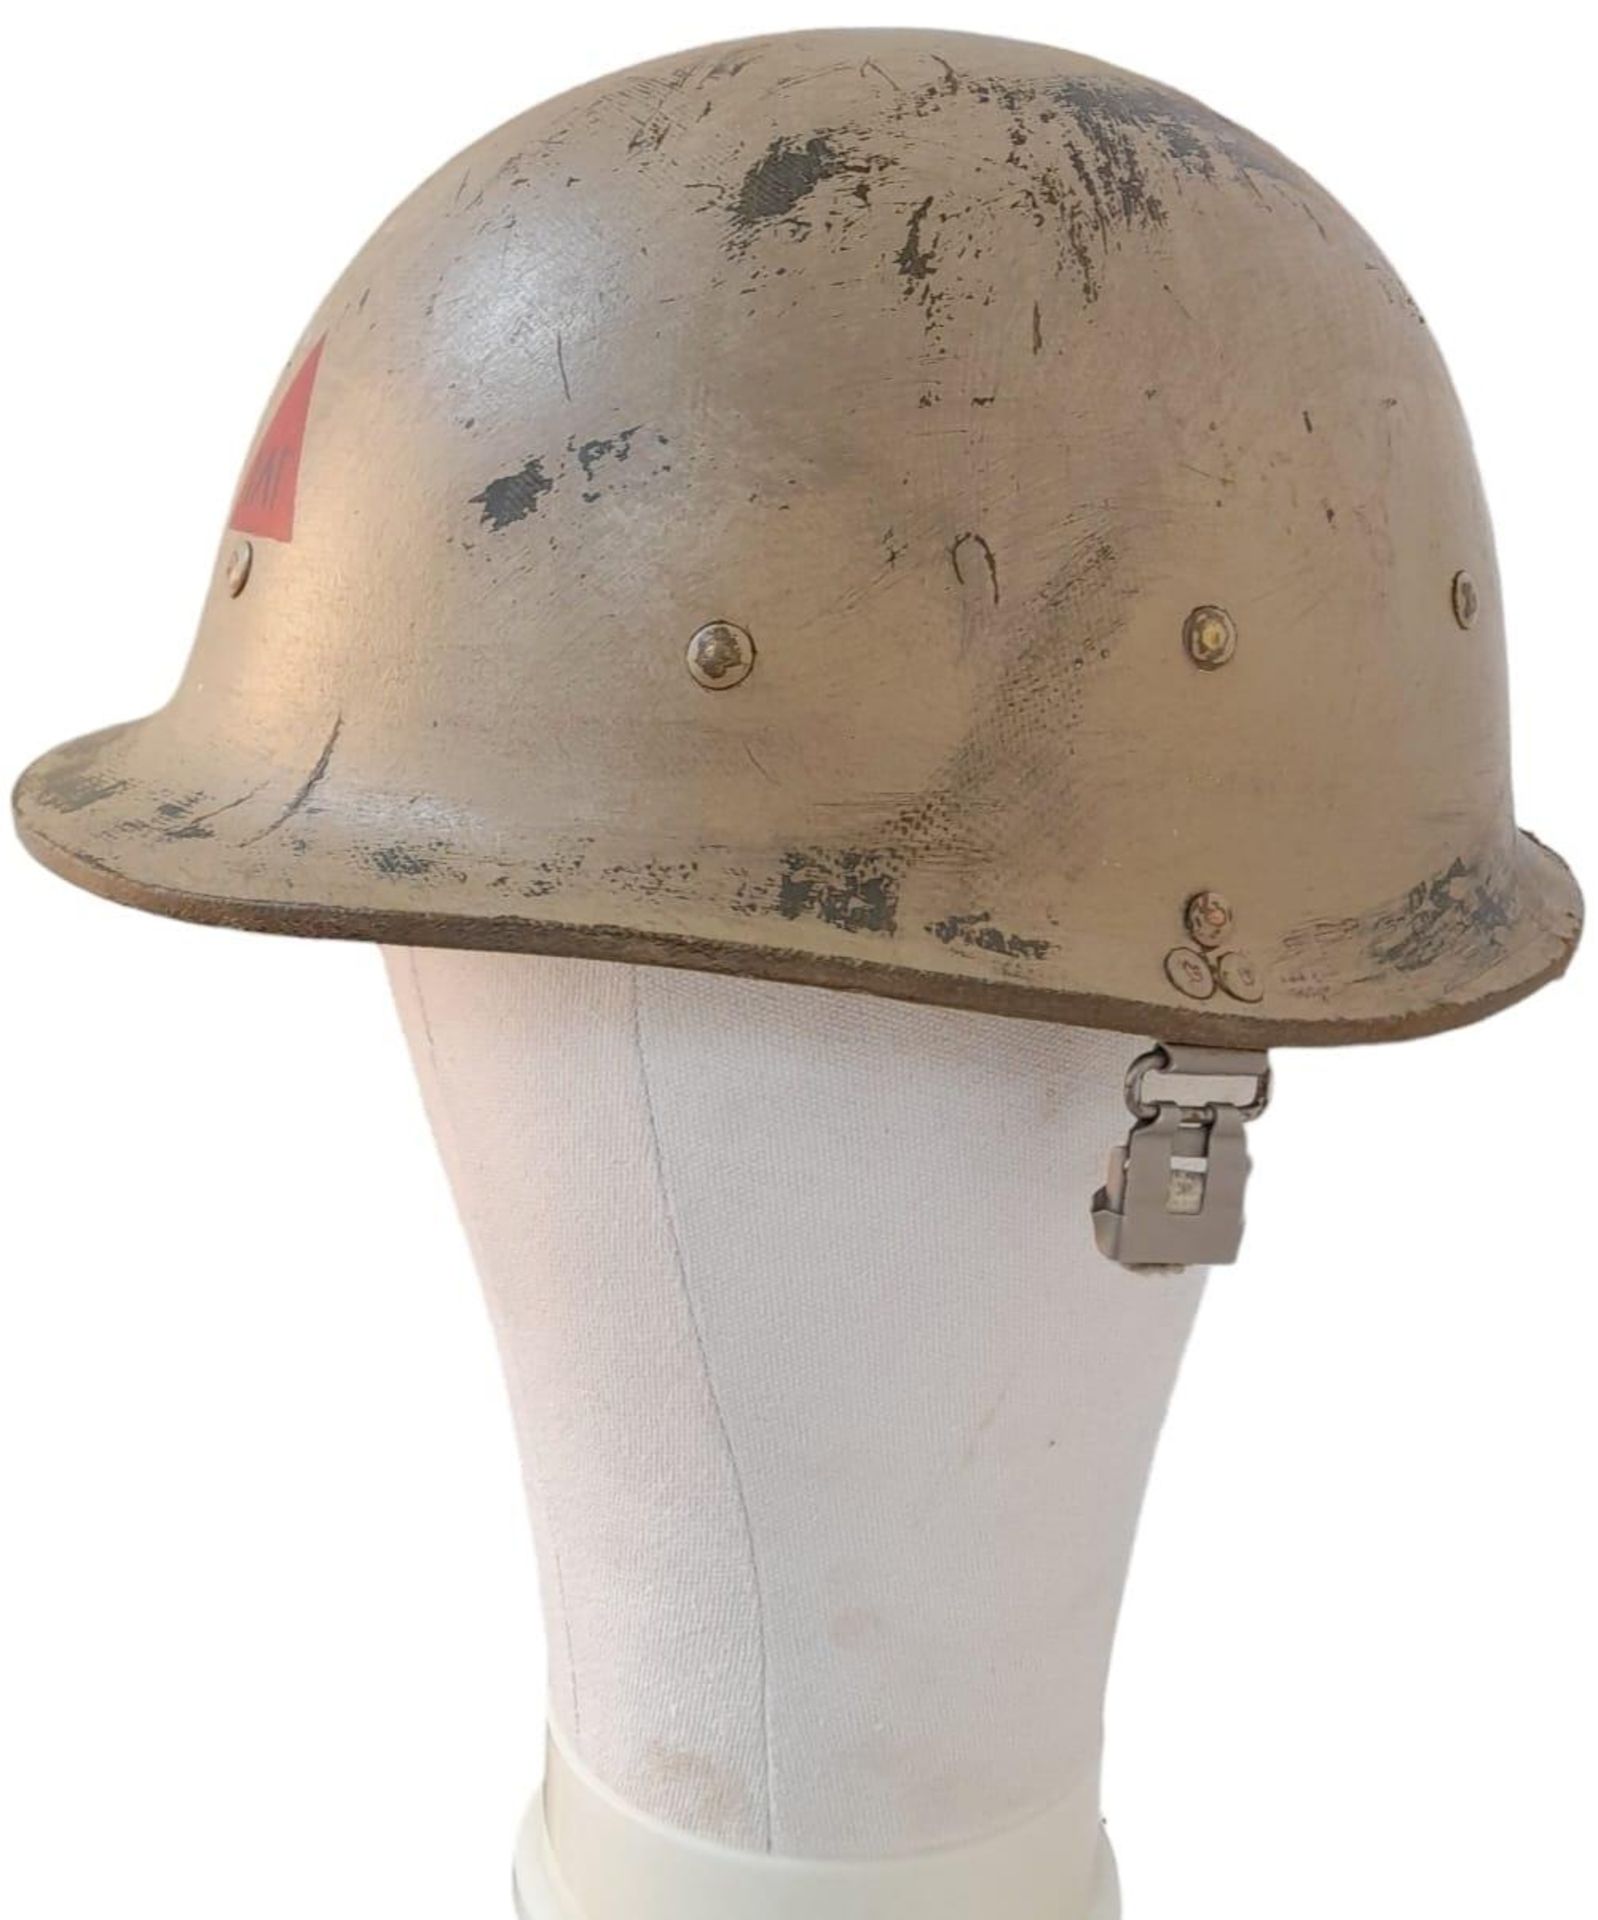 Gulf War 1 (Desert Storm) Iraqi M80 Imperial Guard Helmet. - Image 2 of 4